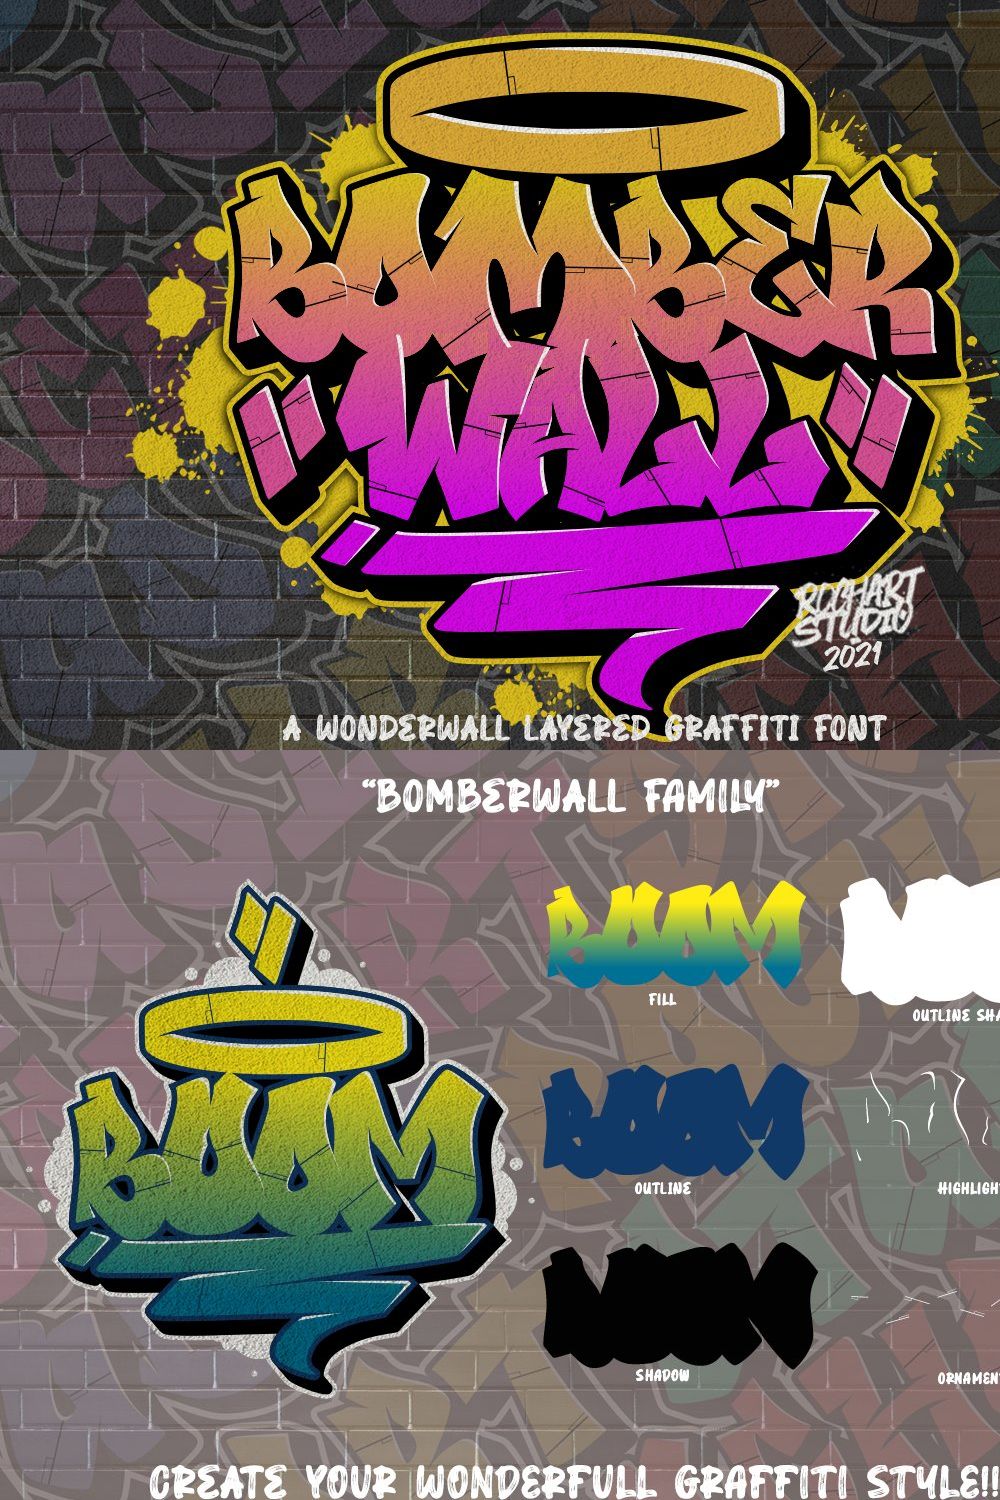 Bomber Wall Graffiti Font pinterest preview image.